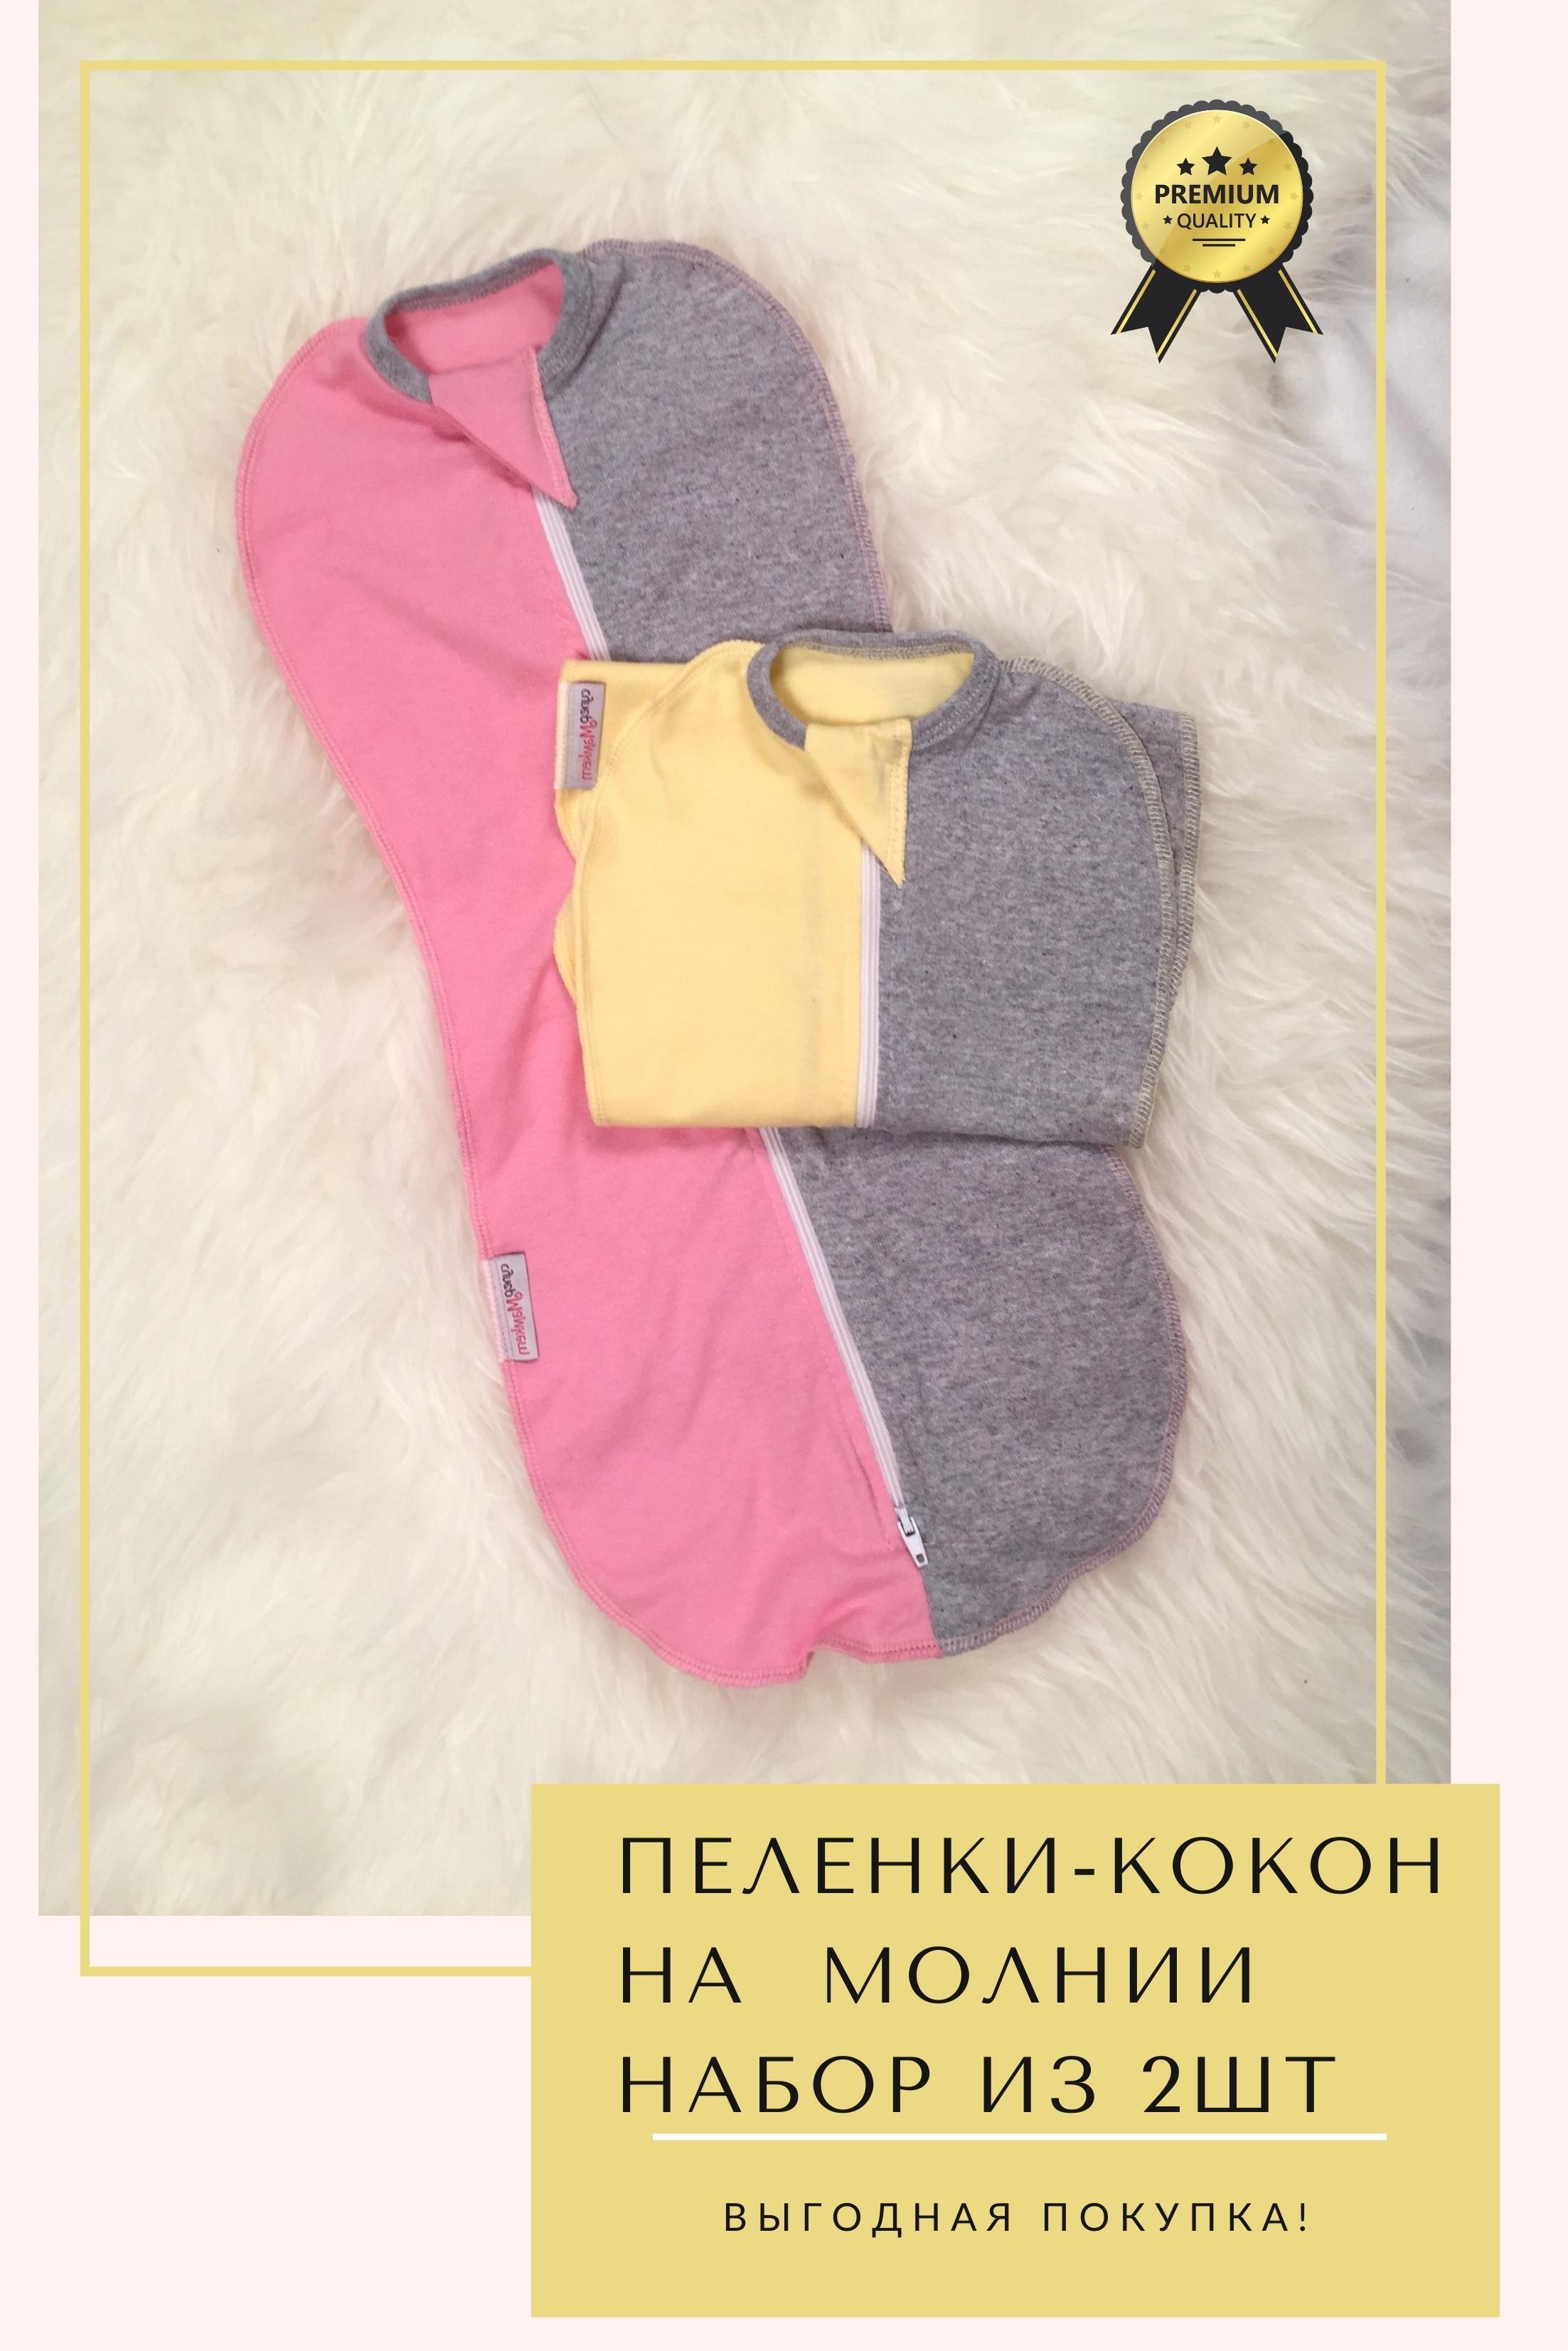 Пеленка-кокон СуперМаМкет розовый, желтый меланж 56-62